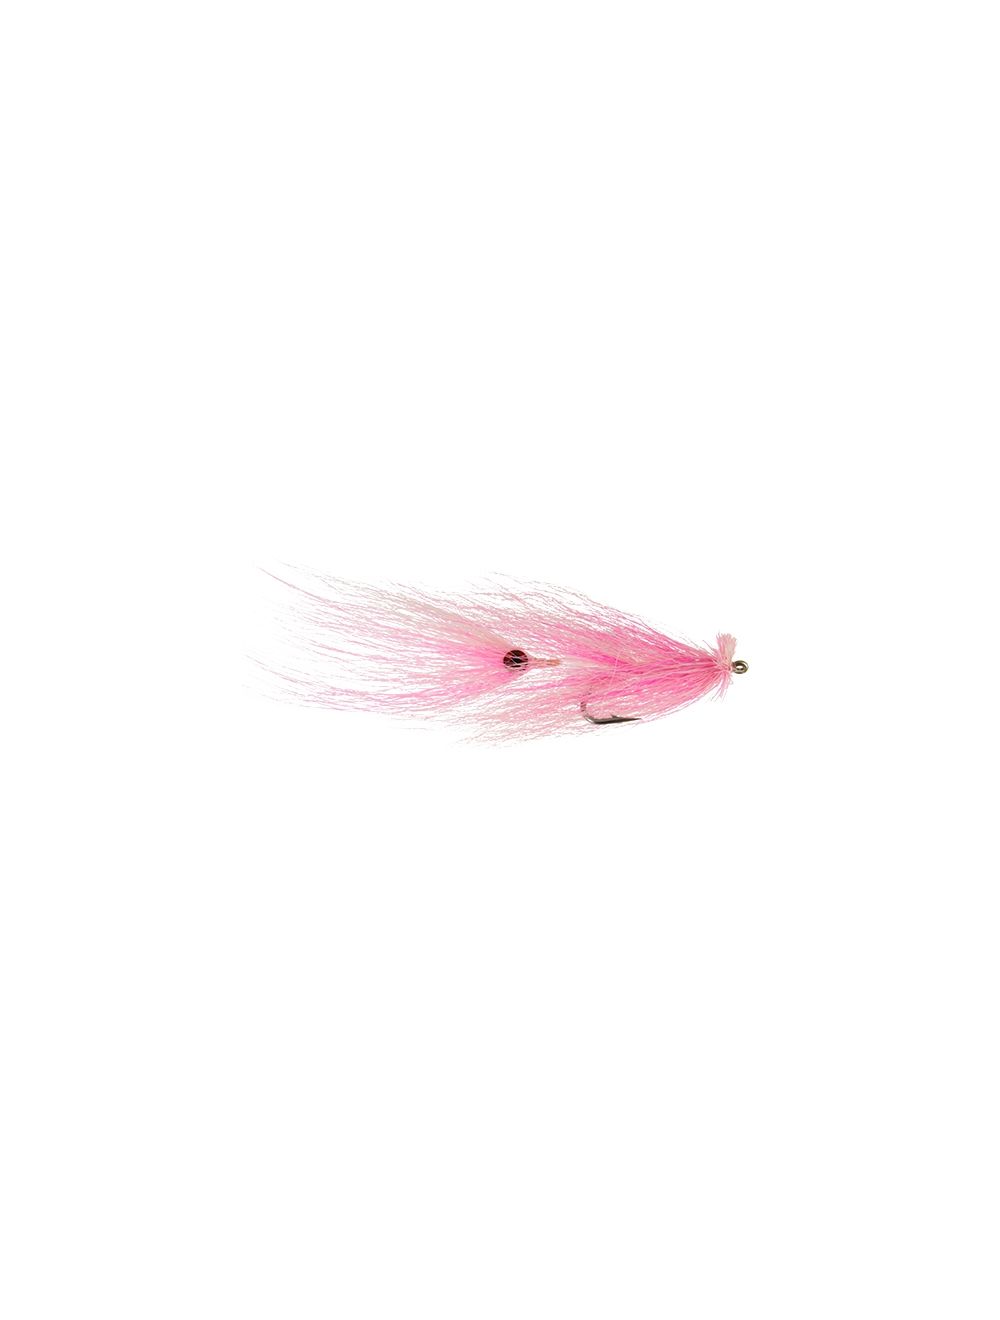 https://eadn-wc02-1020161.nxedge.io/cdn/media/catalog/product/cache/32b930e20bfef0c9badd7ee253a86131/s/q/squid-pink-fly-fishing-flies-saltwater_1.jpg